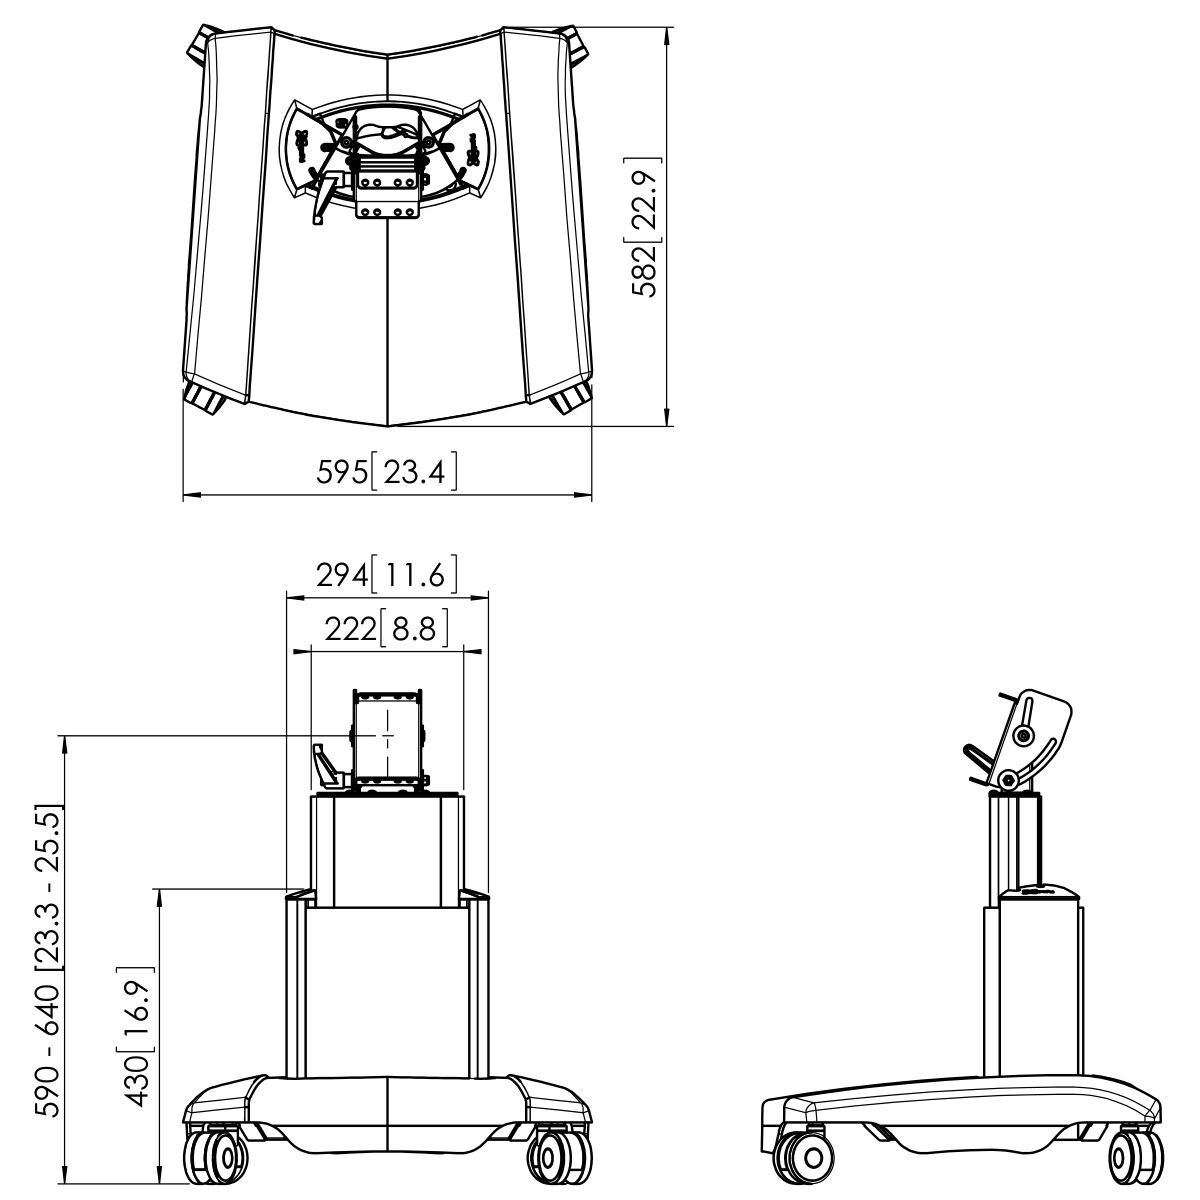 Vogel's PFT 2515 Trolley - Dimensions